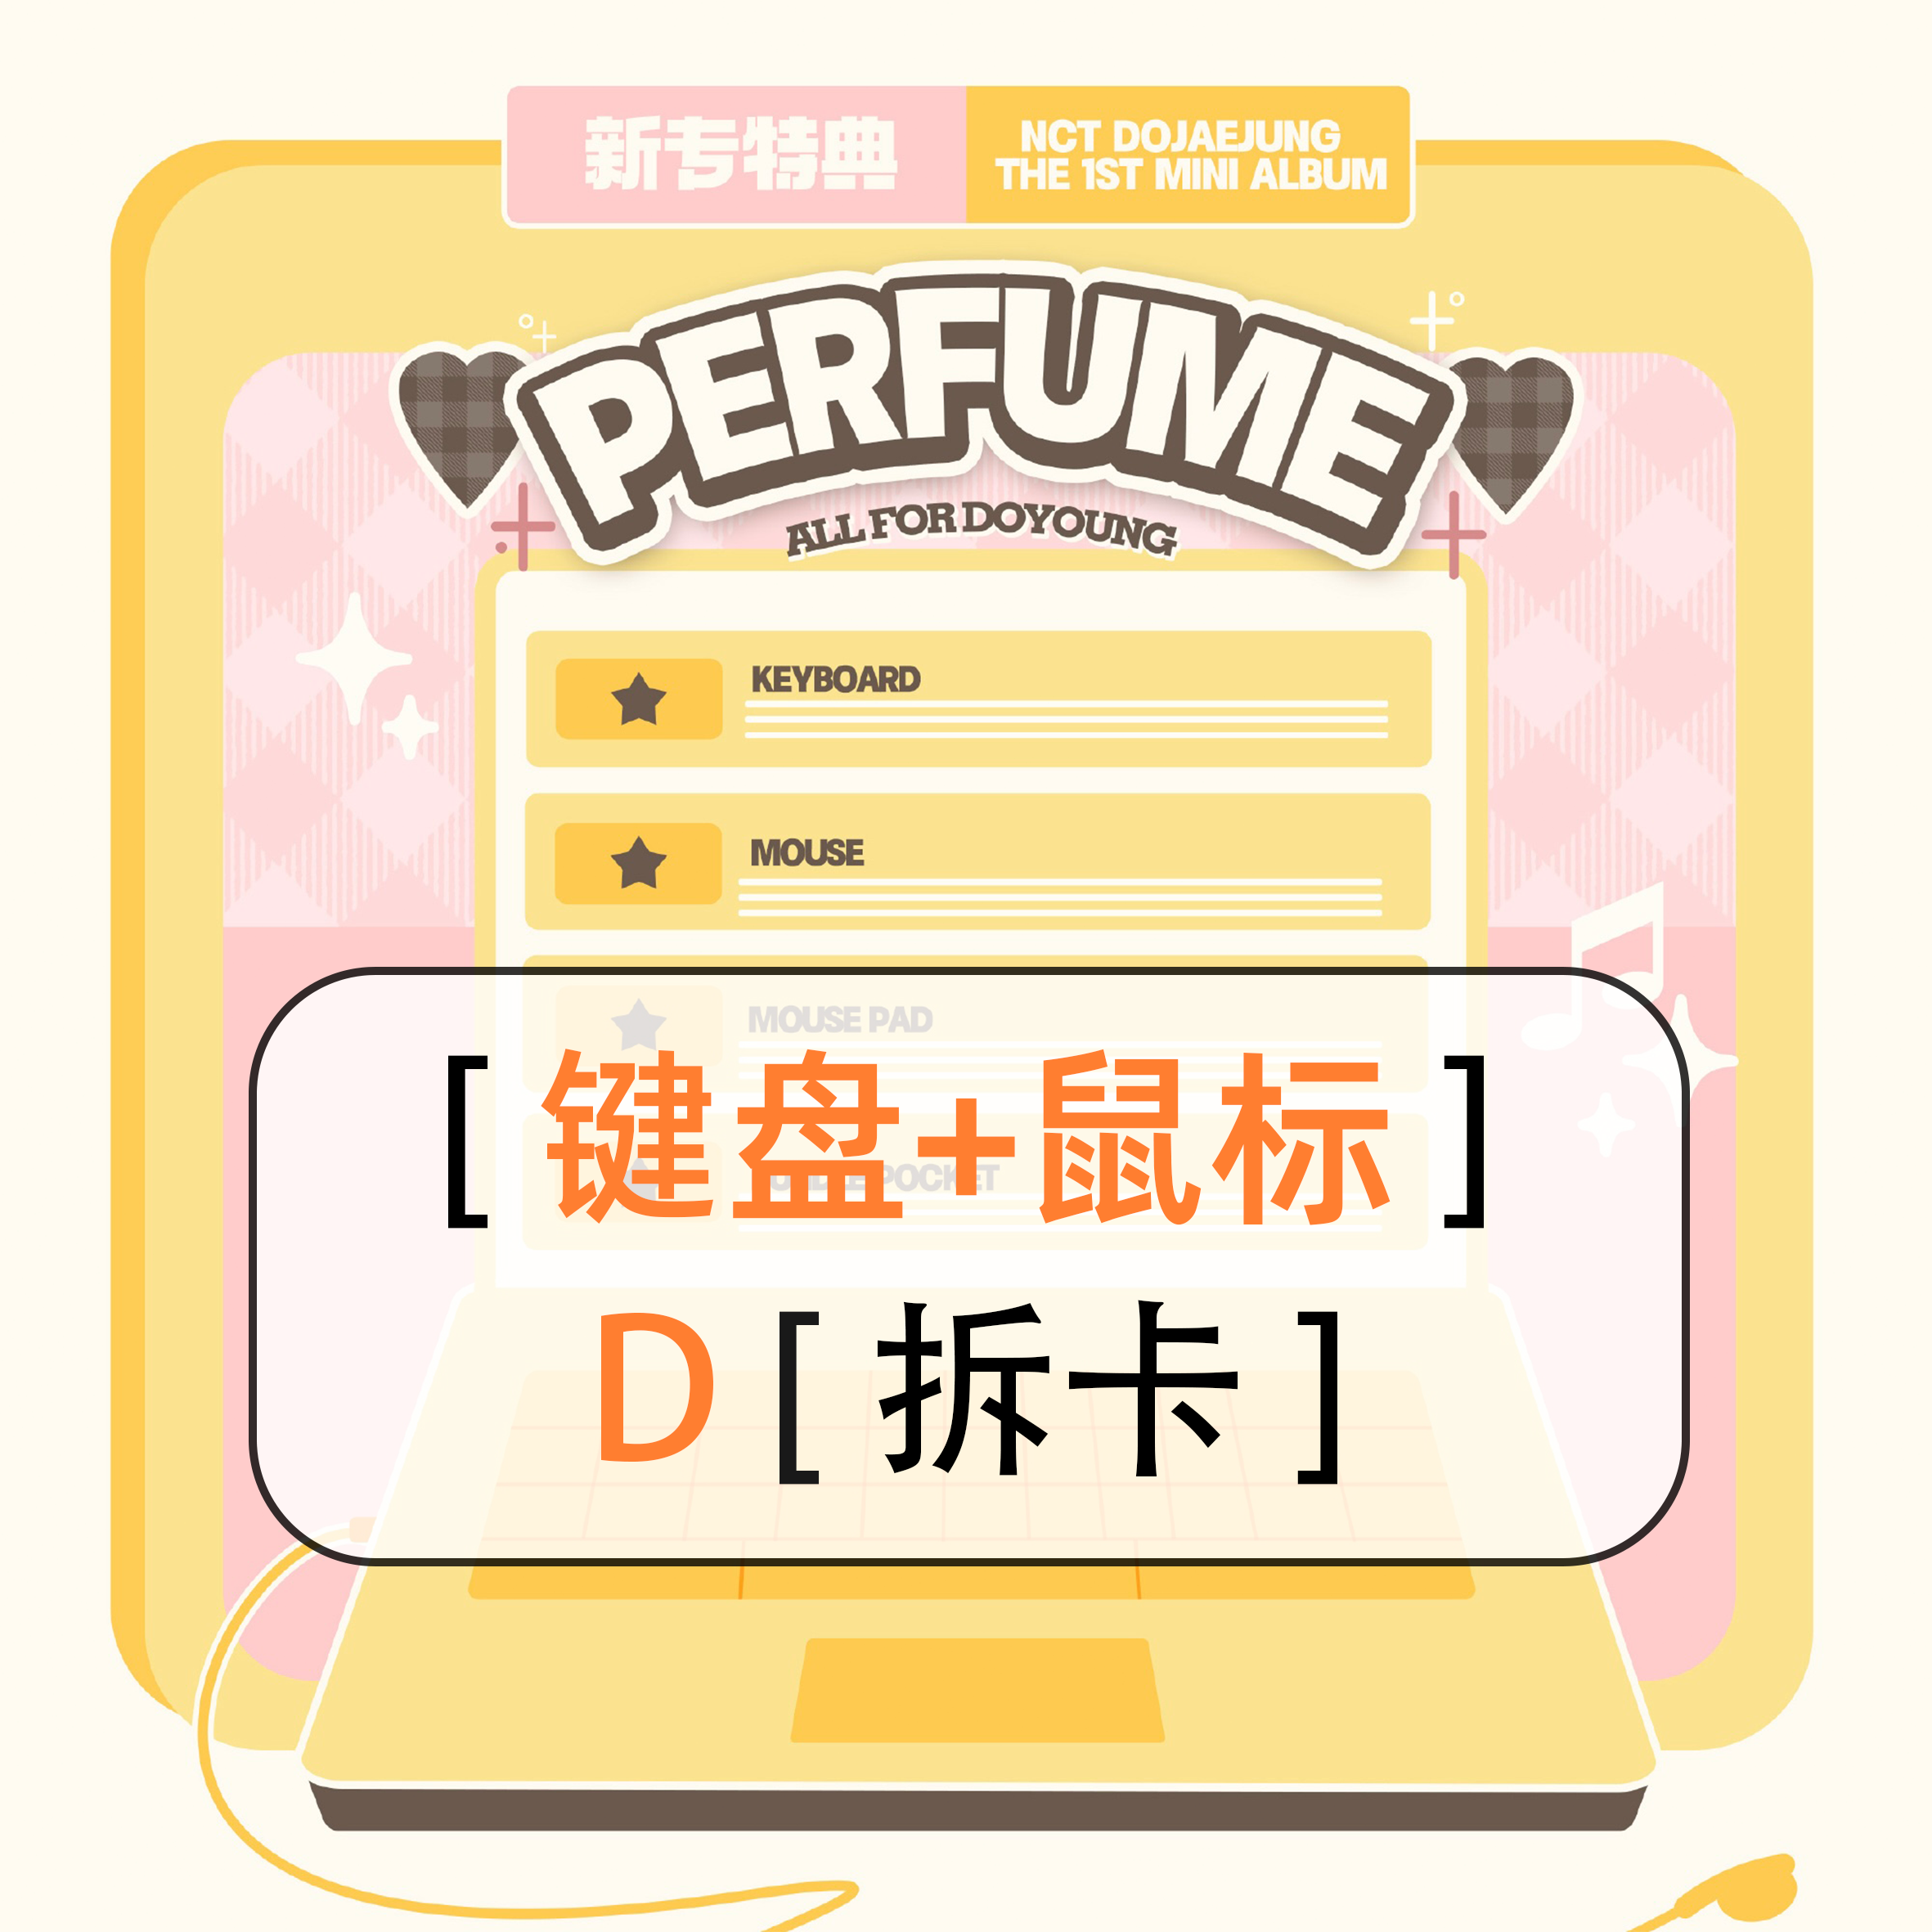 [拆卡专 键盘+鼠标 set D版] NCT DOJAEJUNG - The 1st Mini Album [Perfume] (Digipack Ver.)_道英吧_DoYoungBar